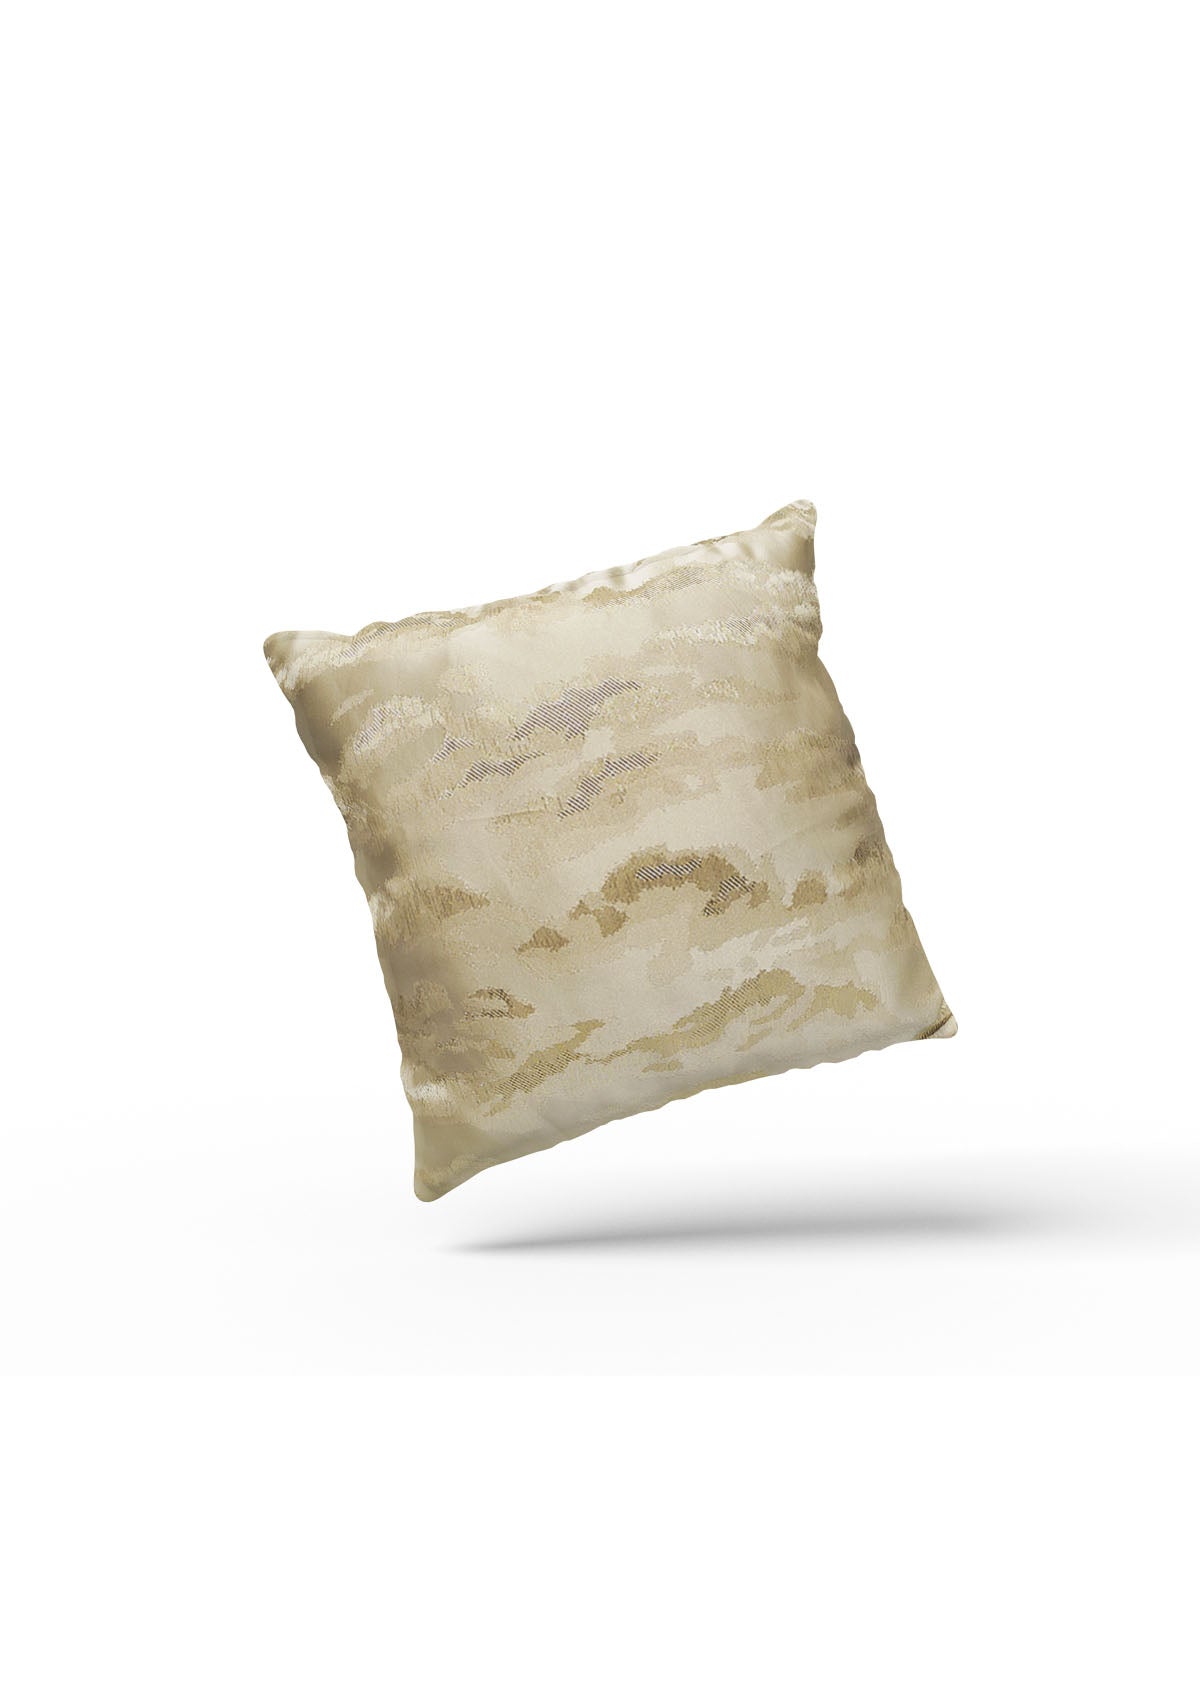 Luxurious gold cushion cover uk with elegant fabric